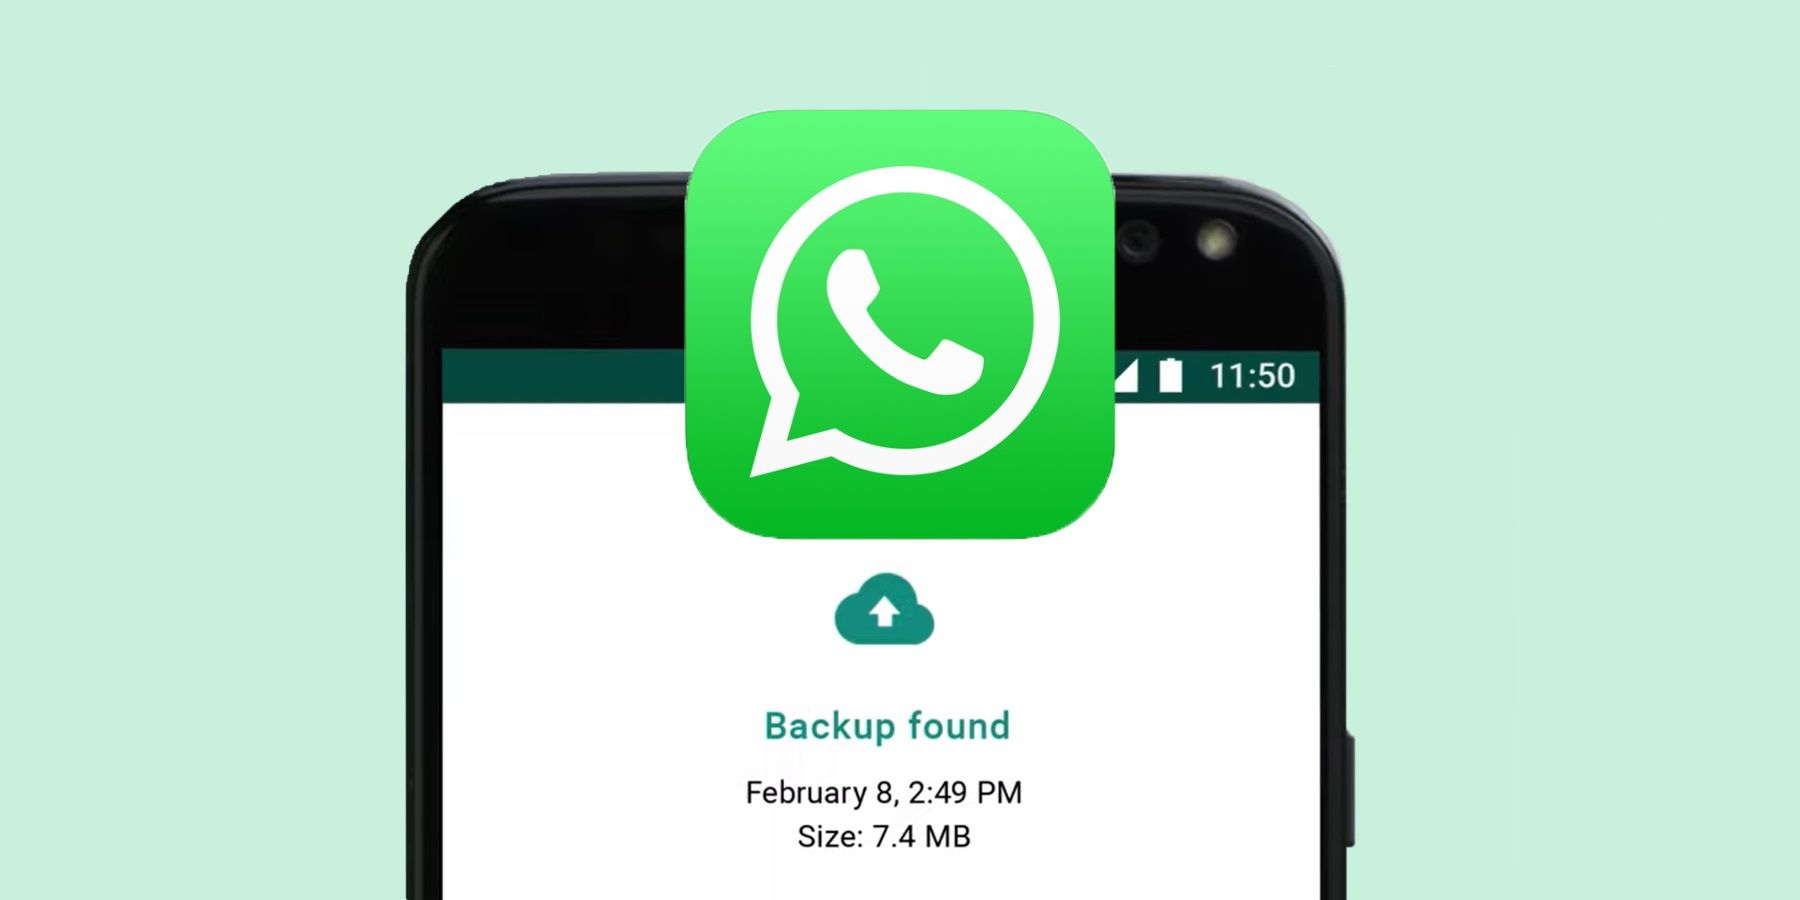 A WhatsApp backup